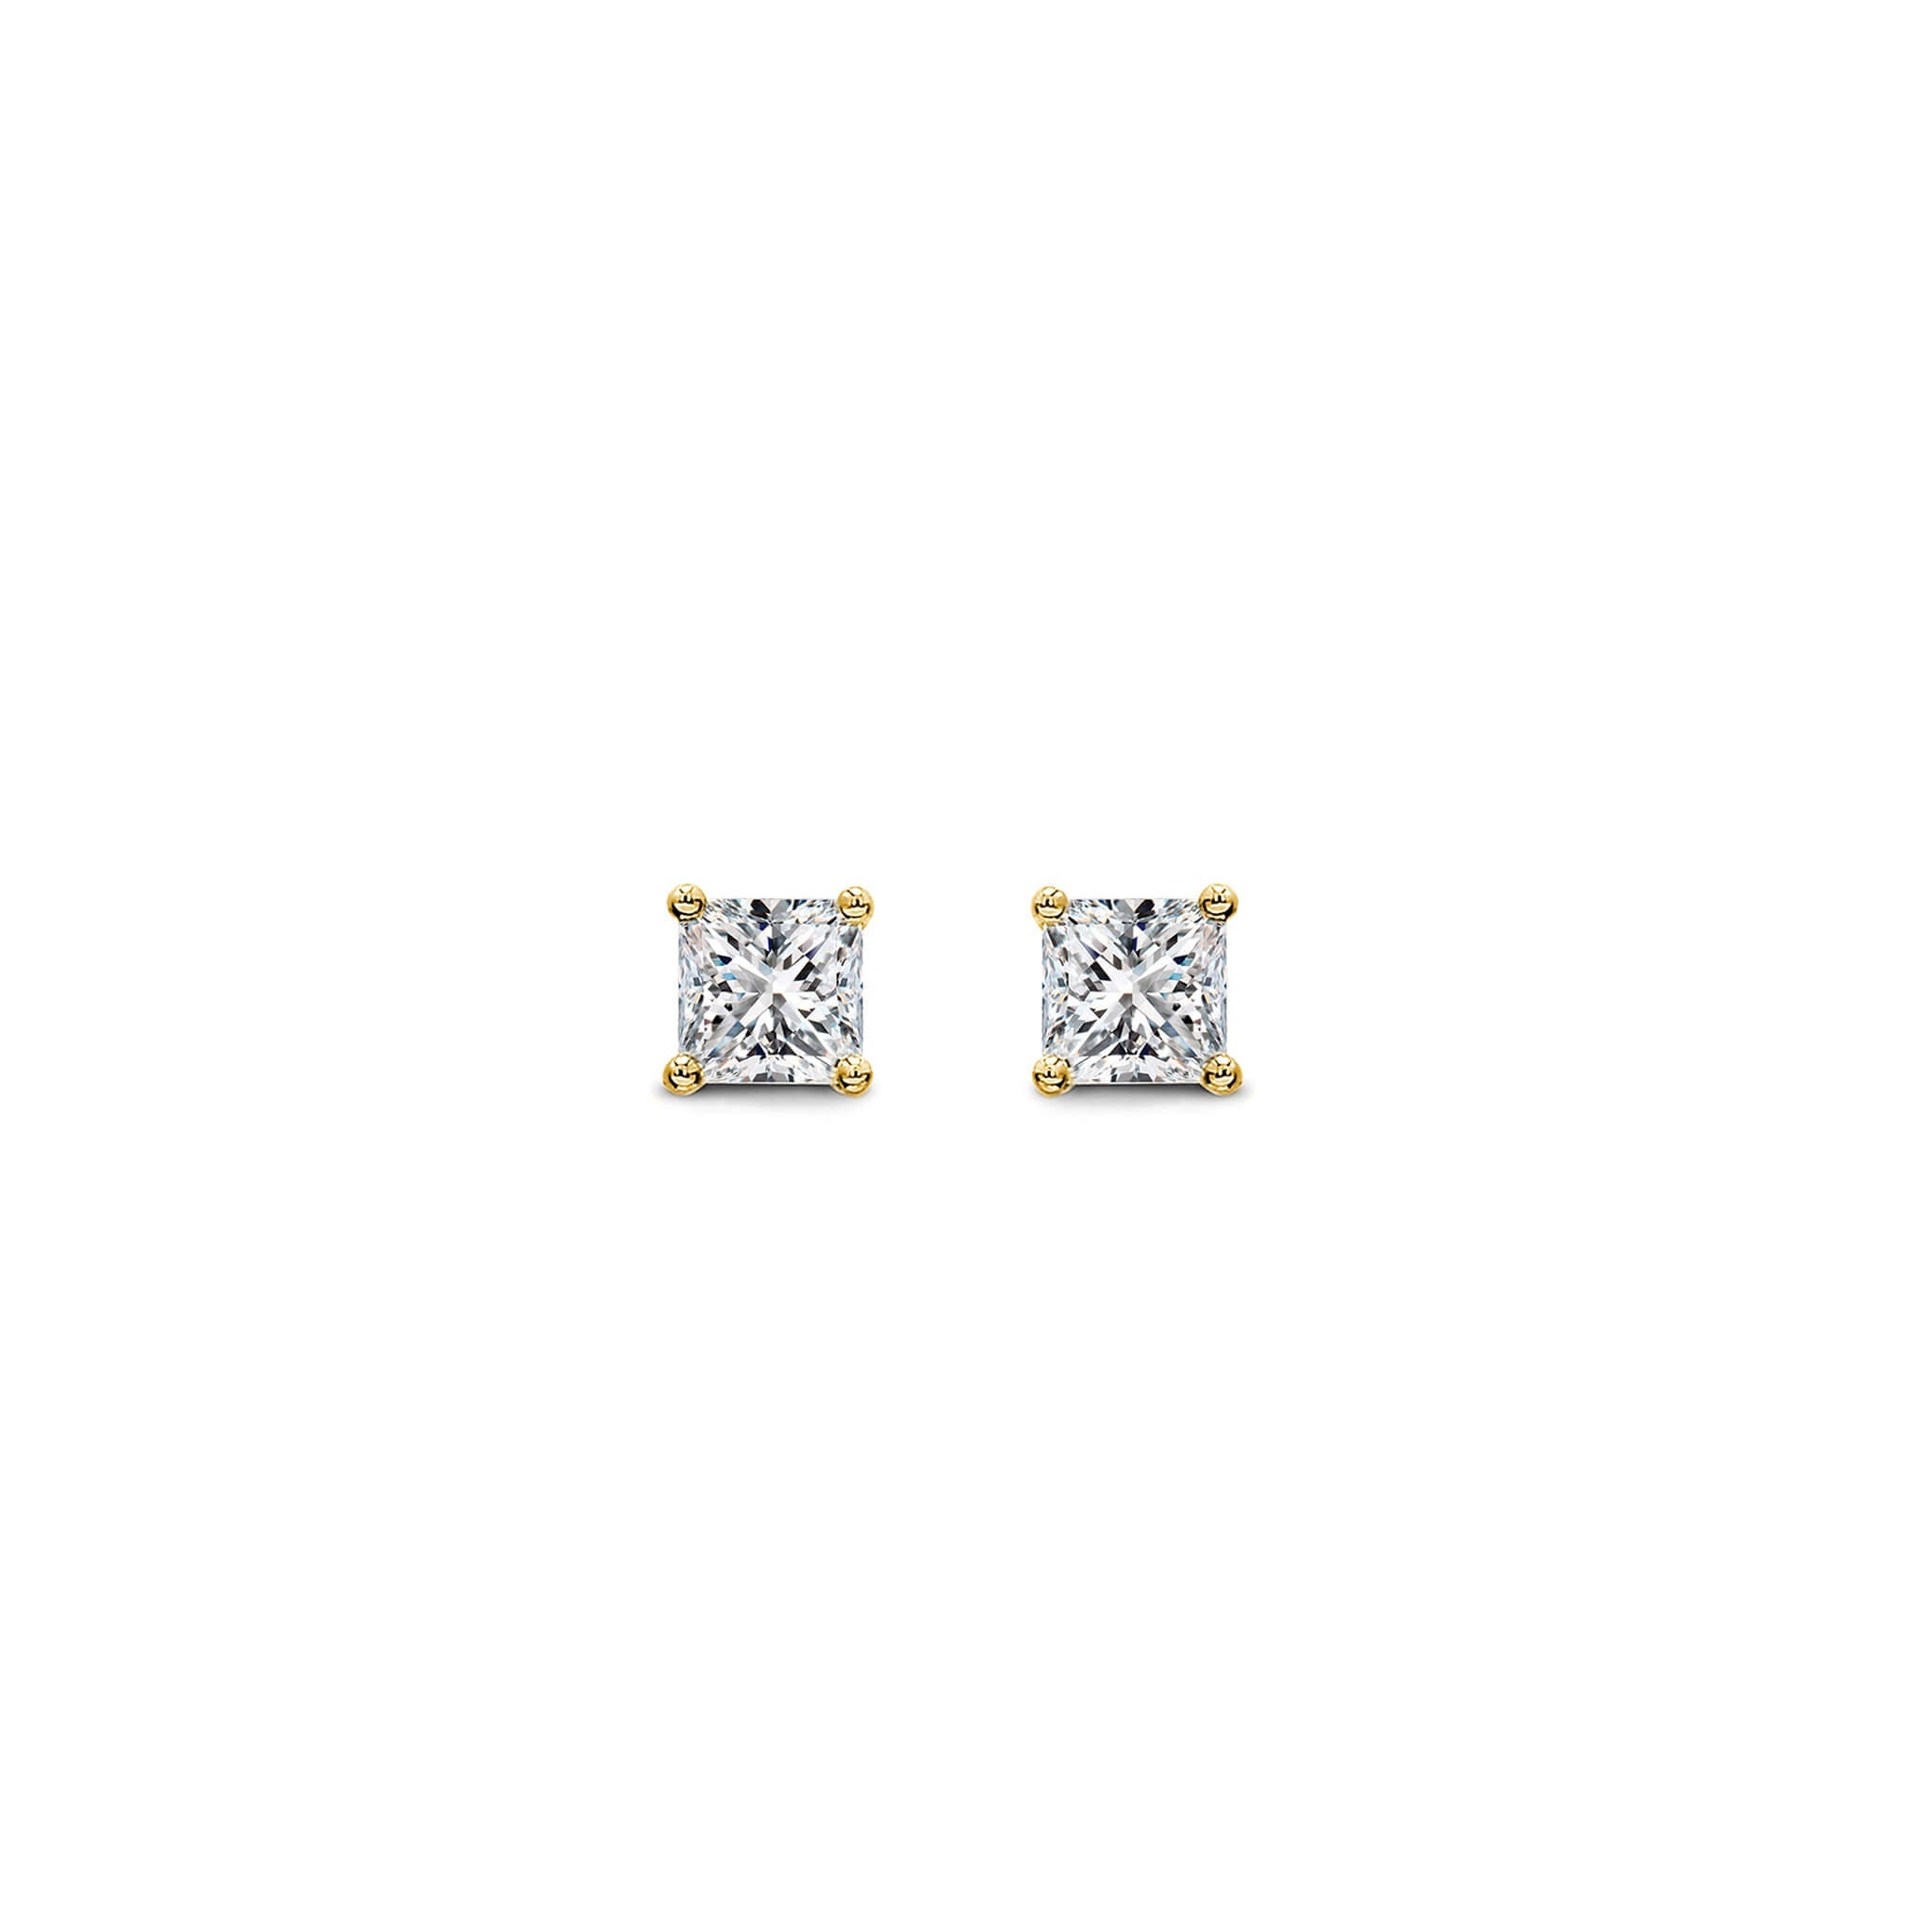 My Girl Diamond Earrings - Front View - SHIMANSKY.CO.ZA